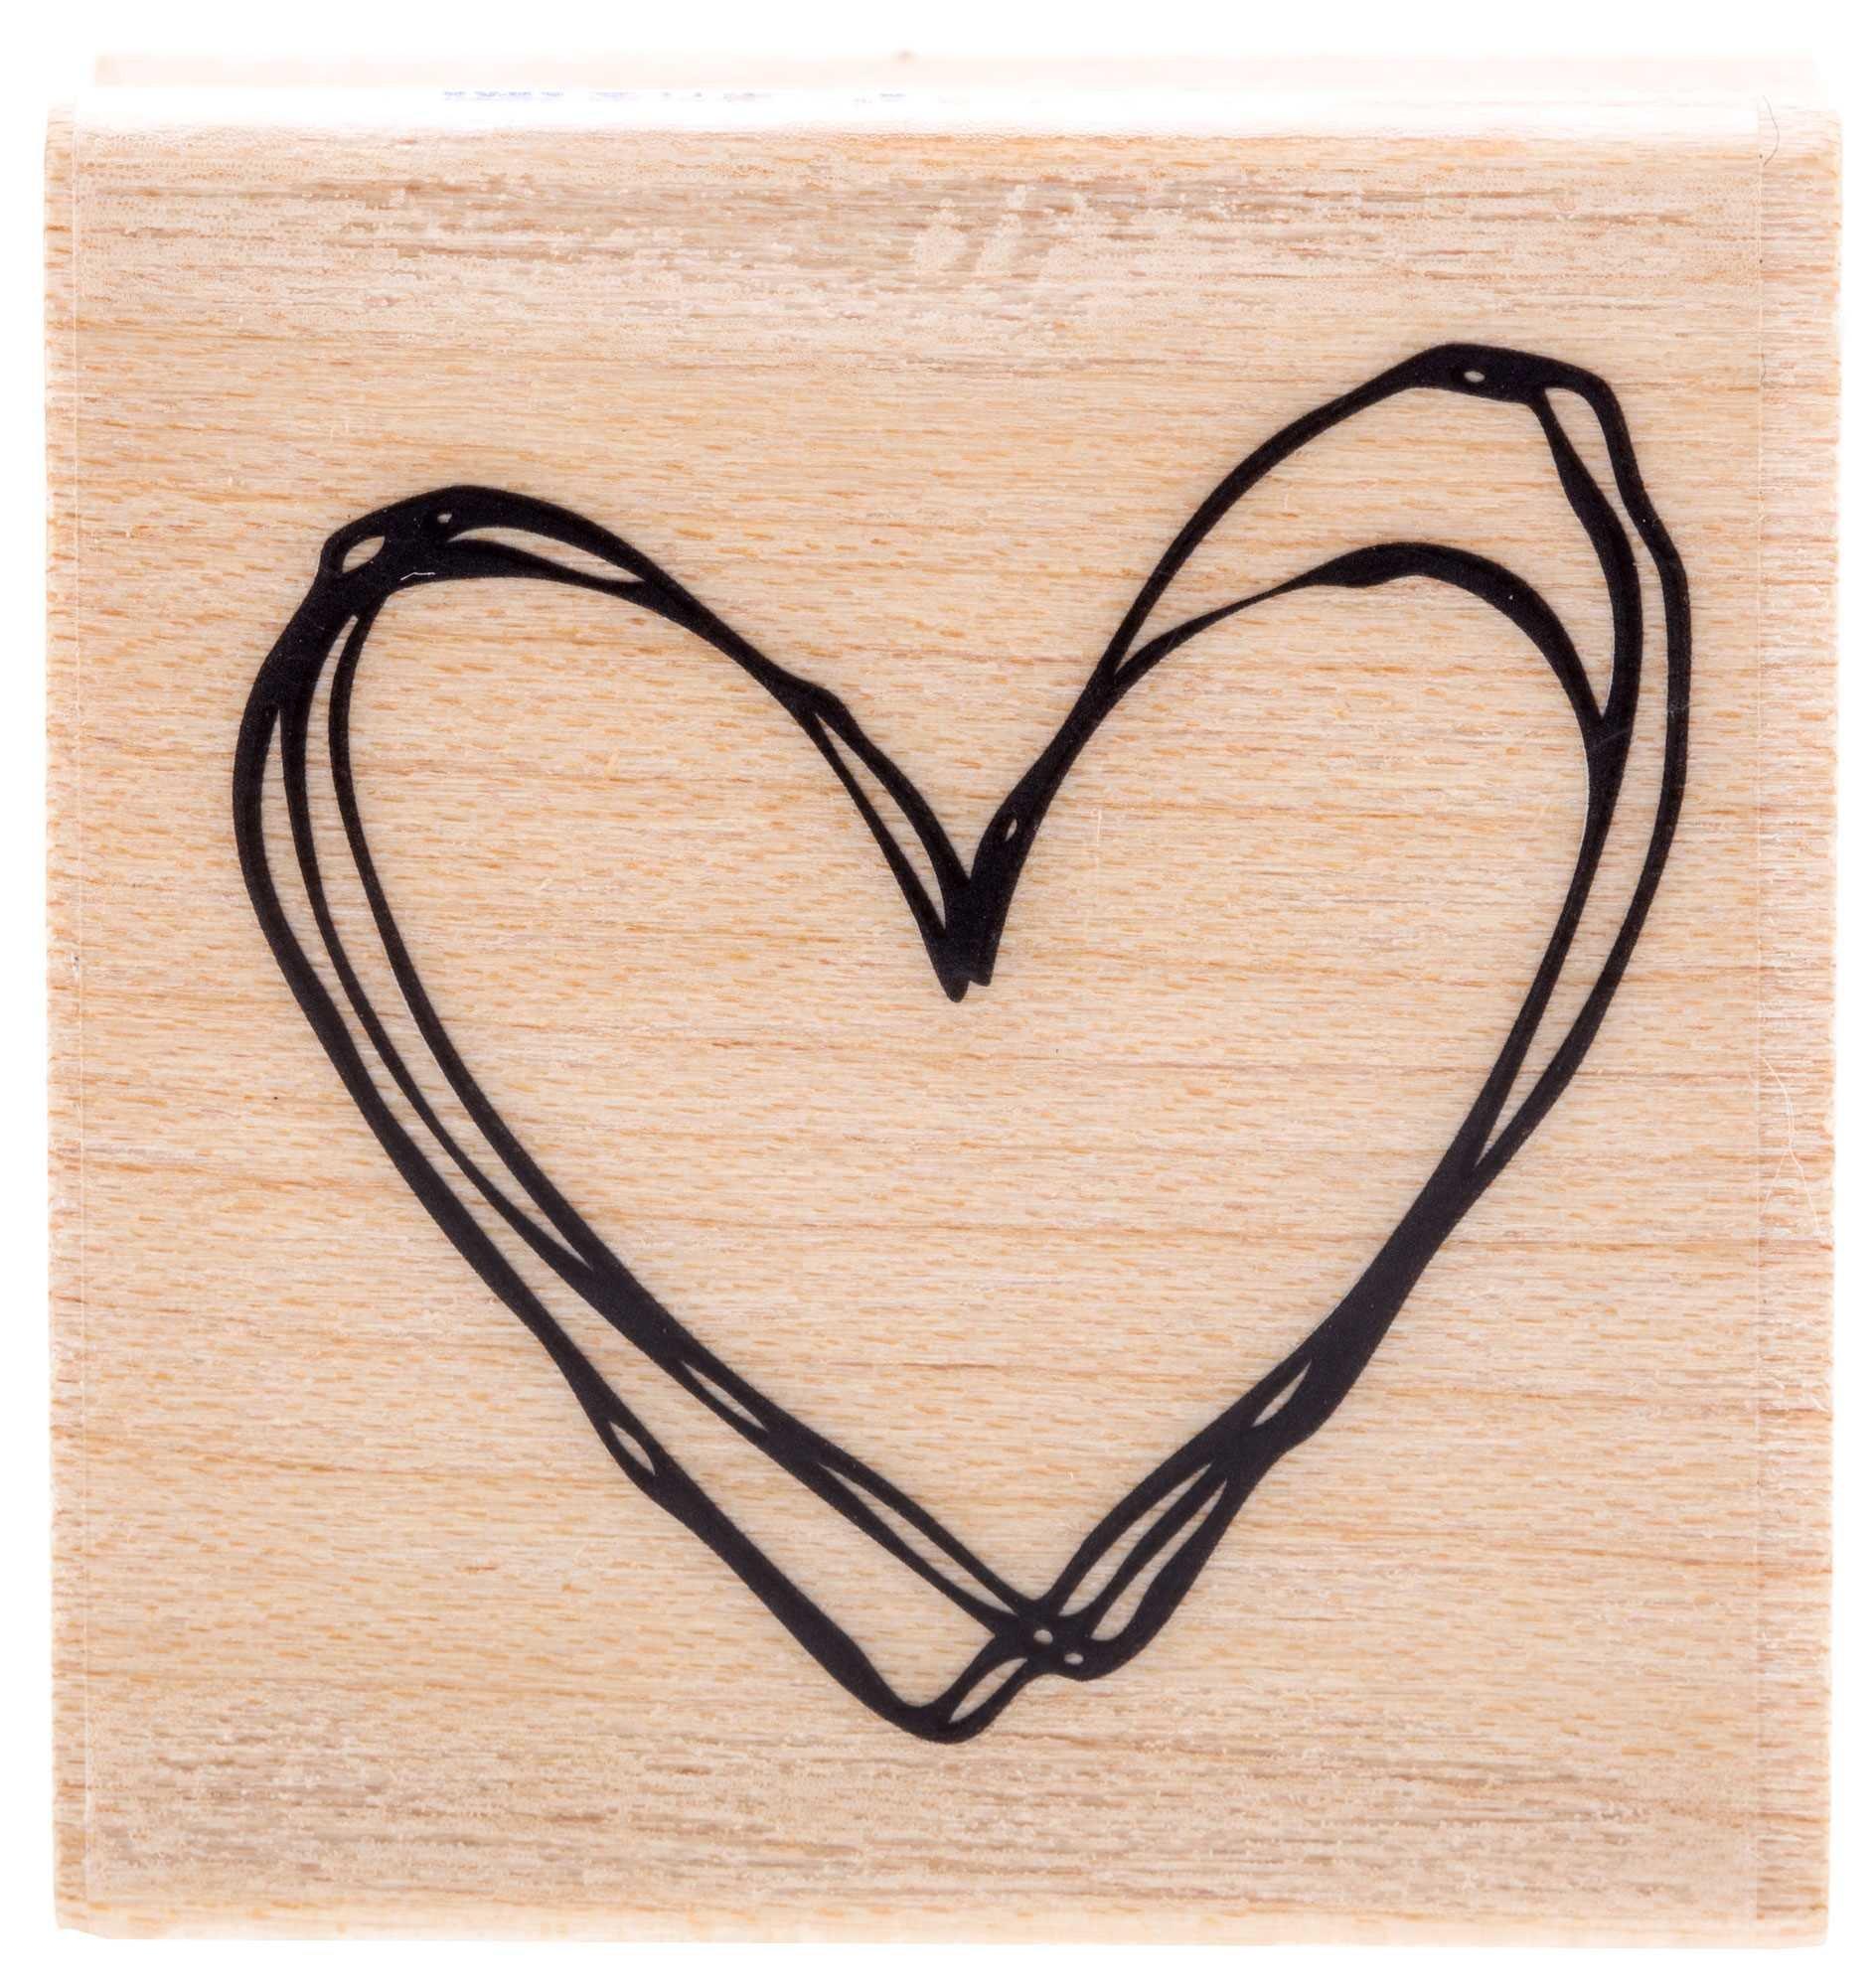 DIY Heart Stamps - Friends Art Lab